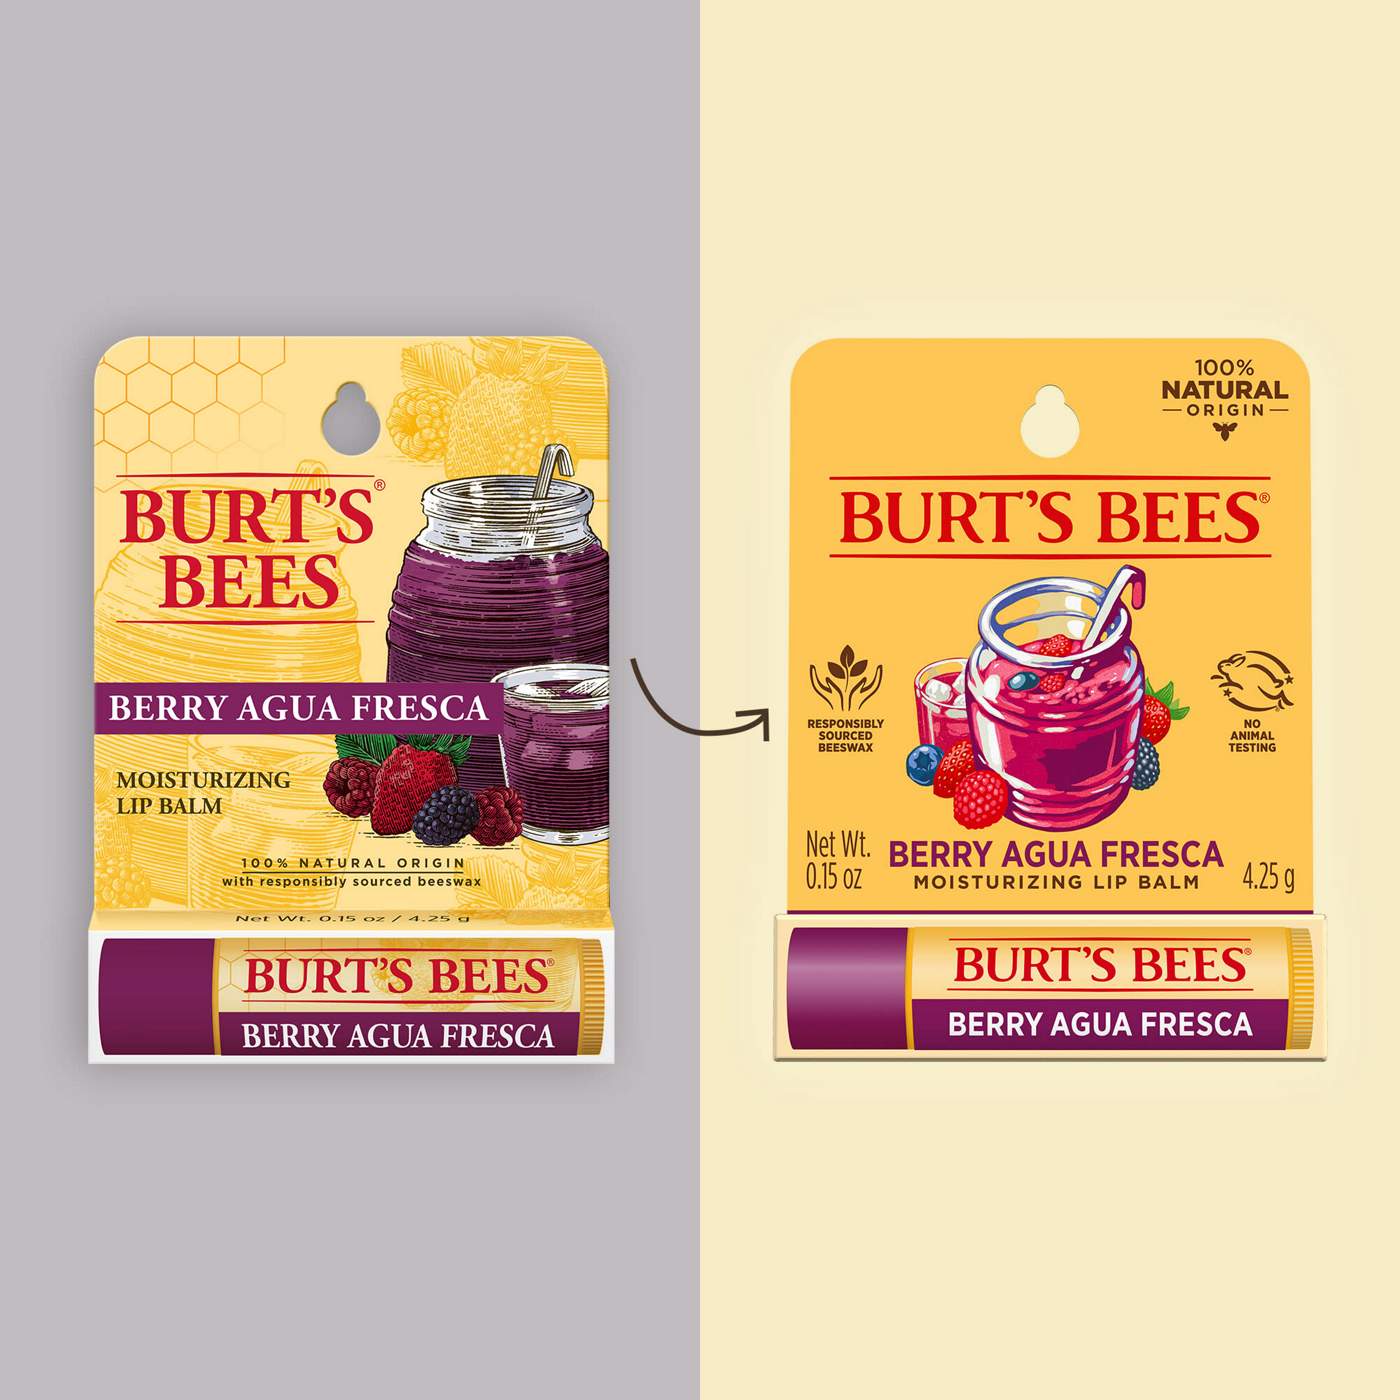 Burt's Bees 100% Natural Origin Moisturizing Lip Balm - Berry Agua Fresca; image 10 of 11